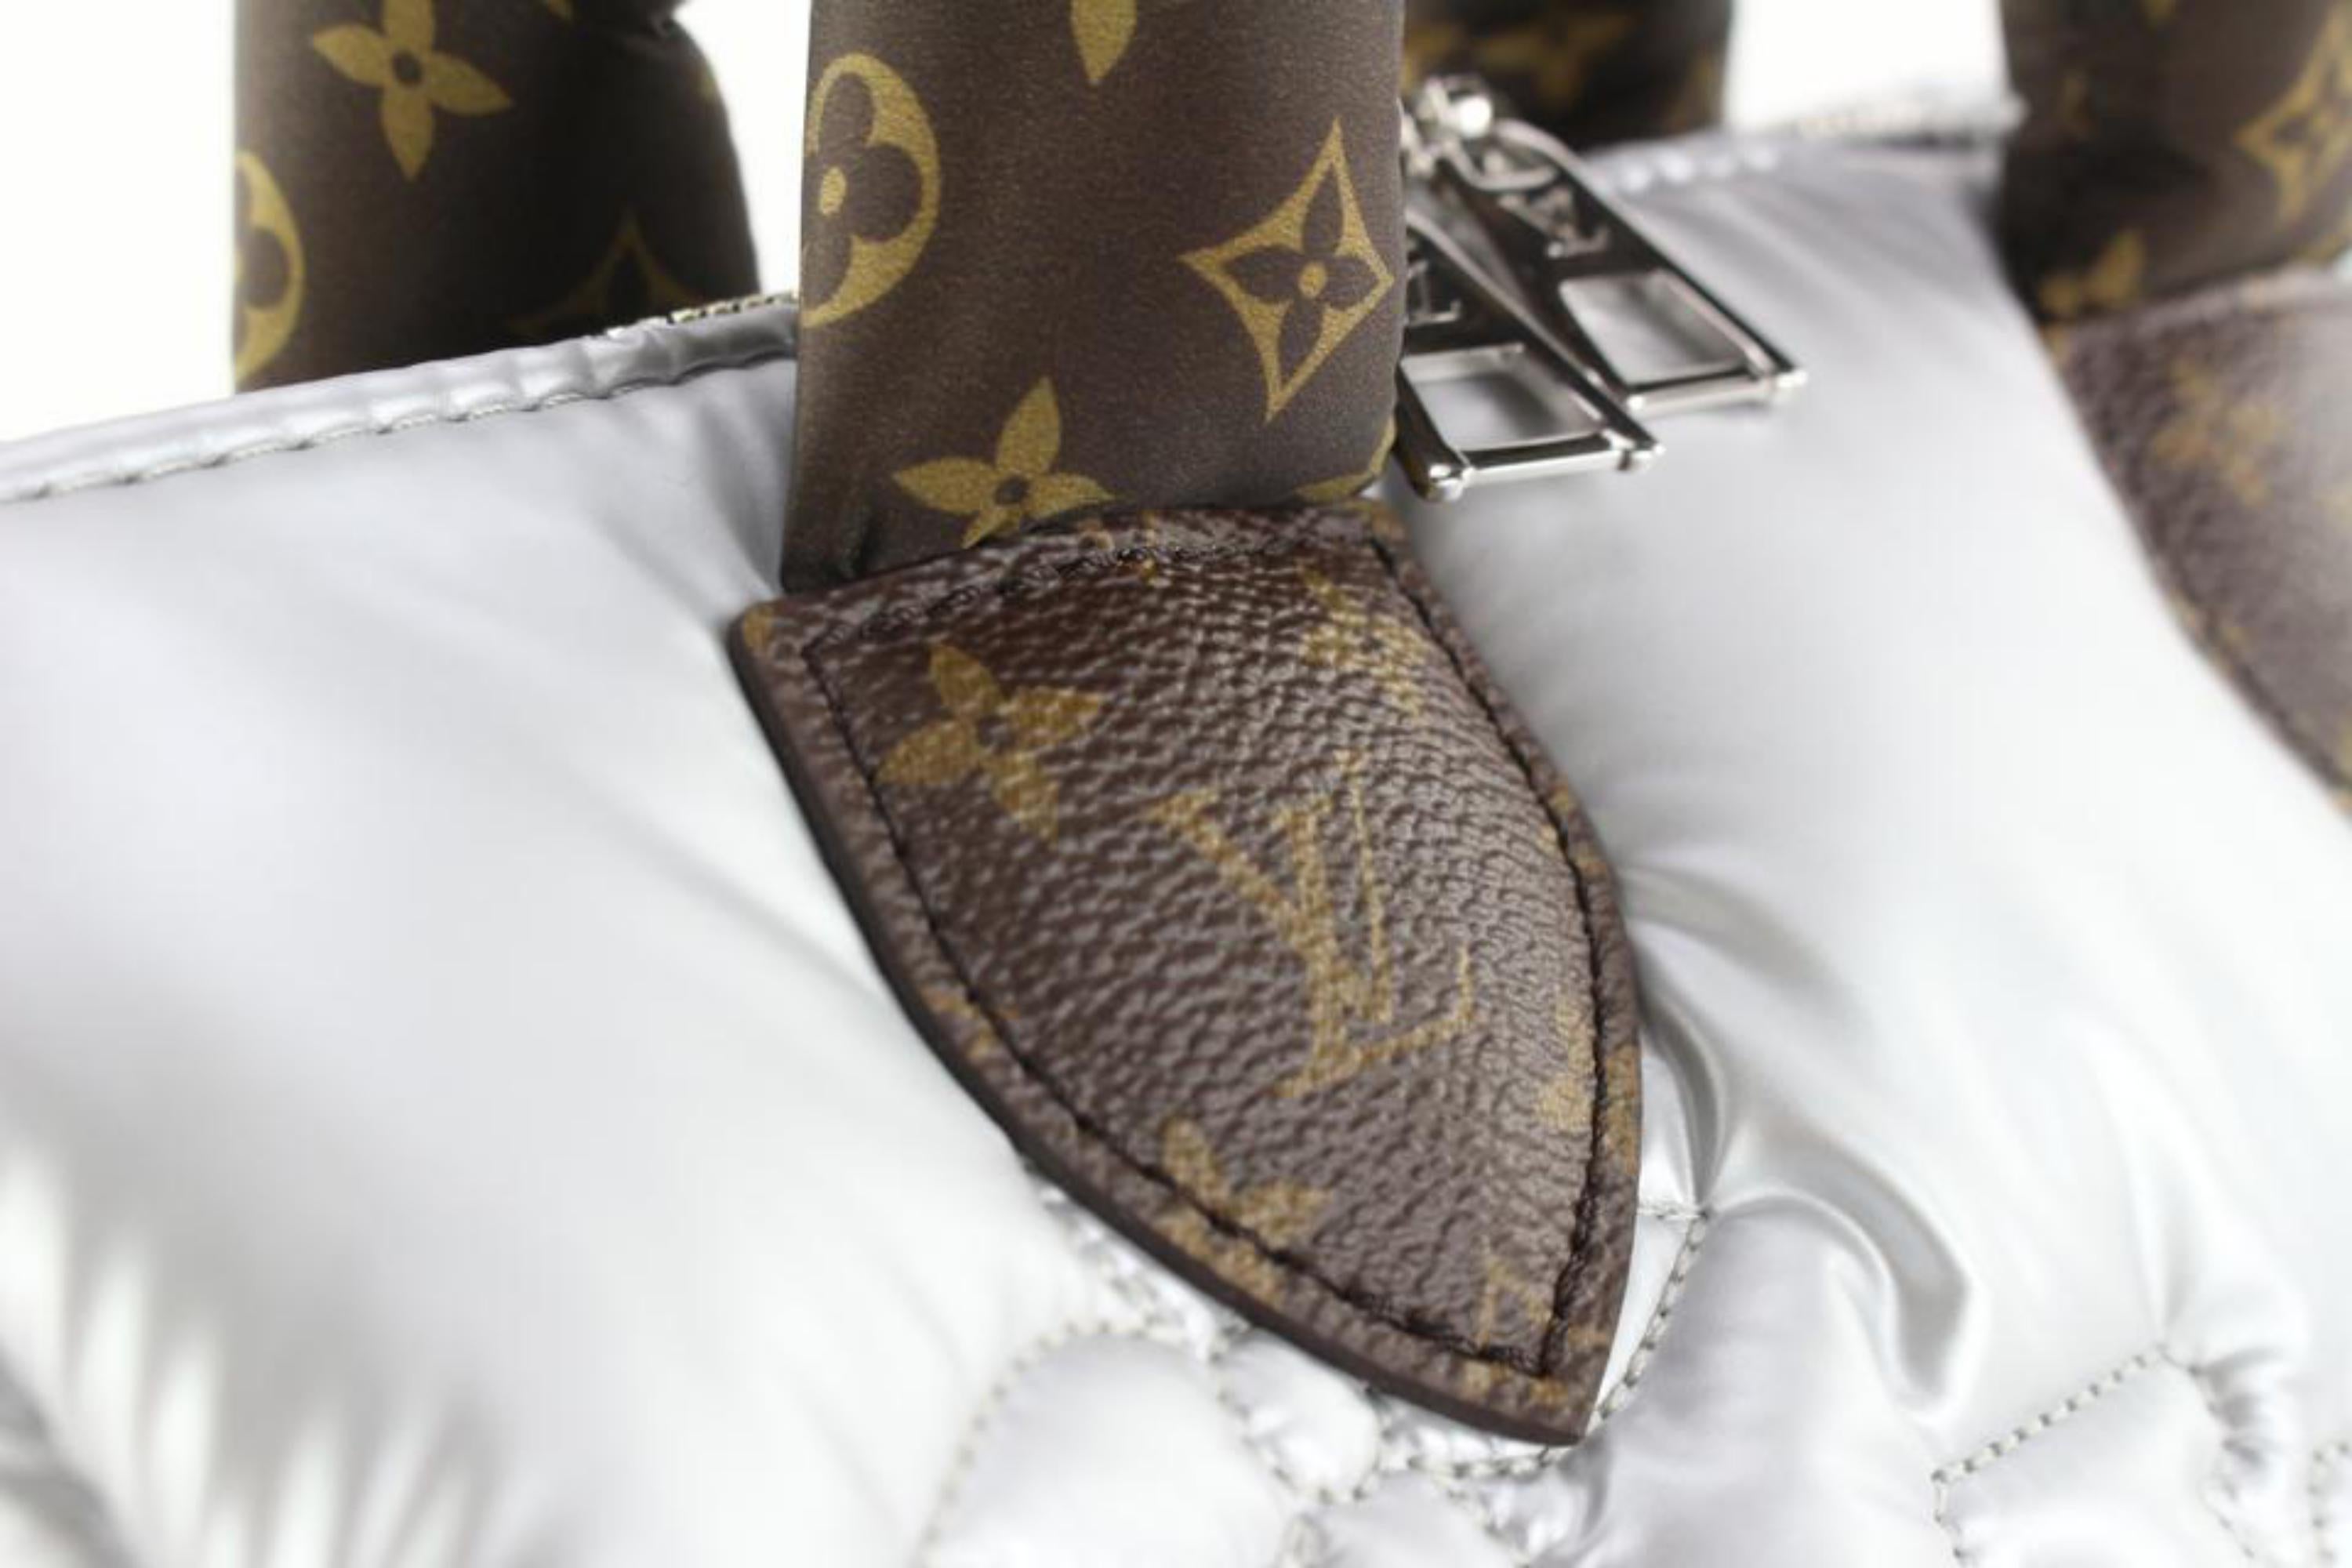 Louis Vuitton LV Speedy Monogram Canvas Pillow Bag Handbag Shoulder